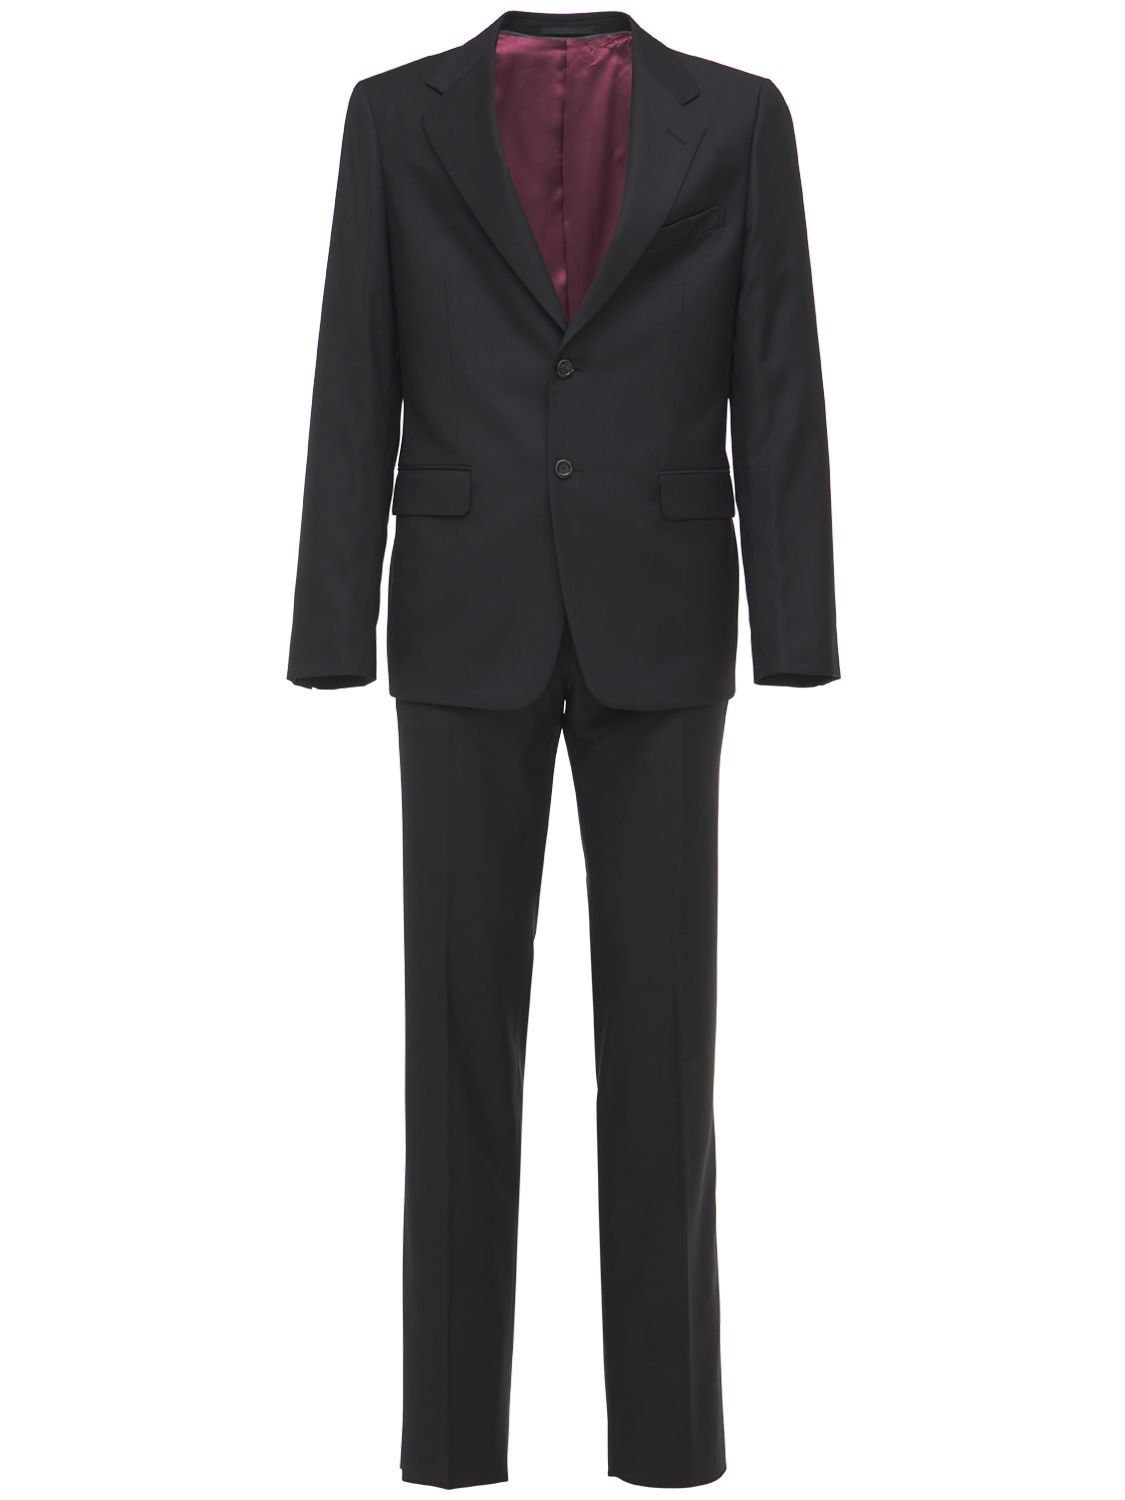 GUCCI Natural Wool Blend London Suit for Men